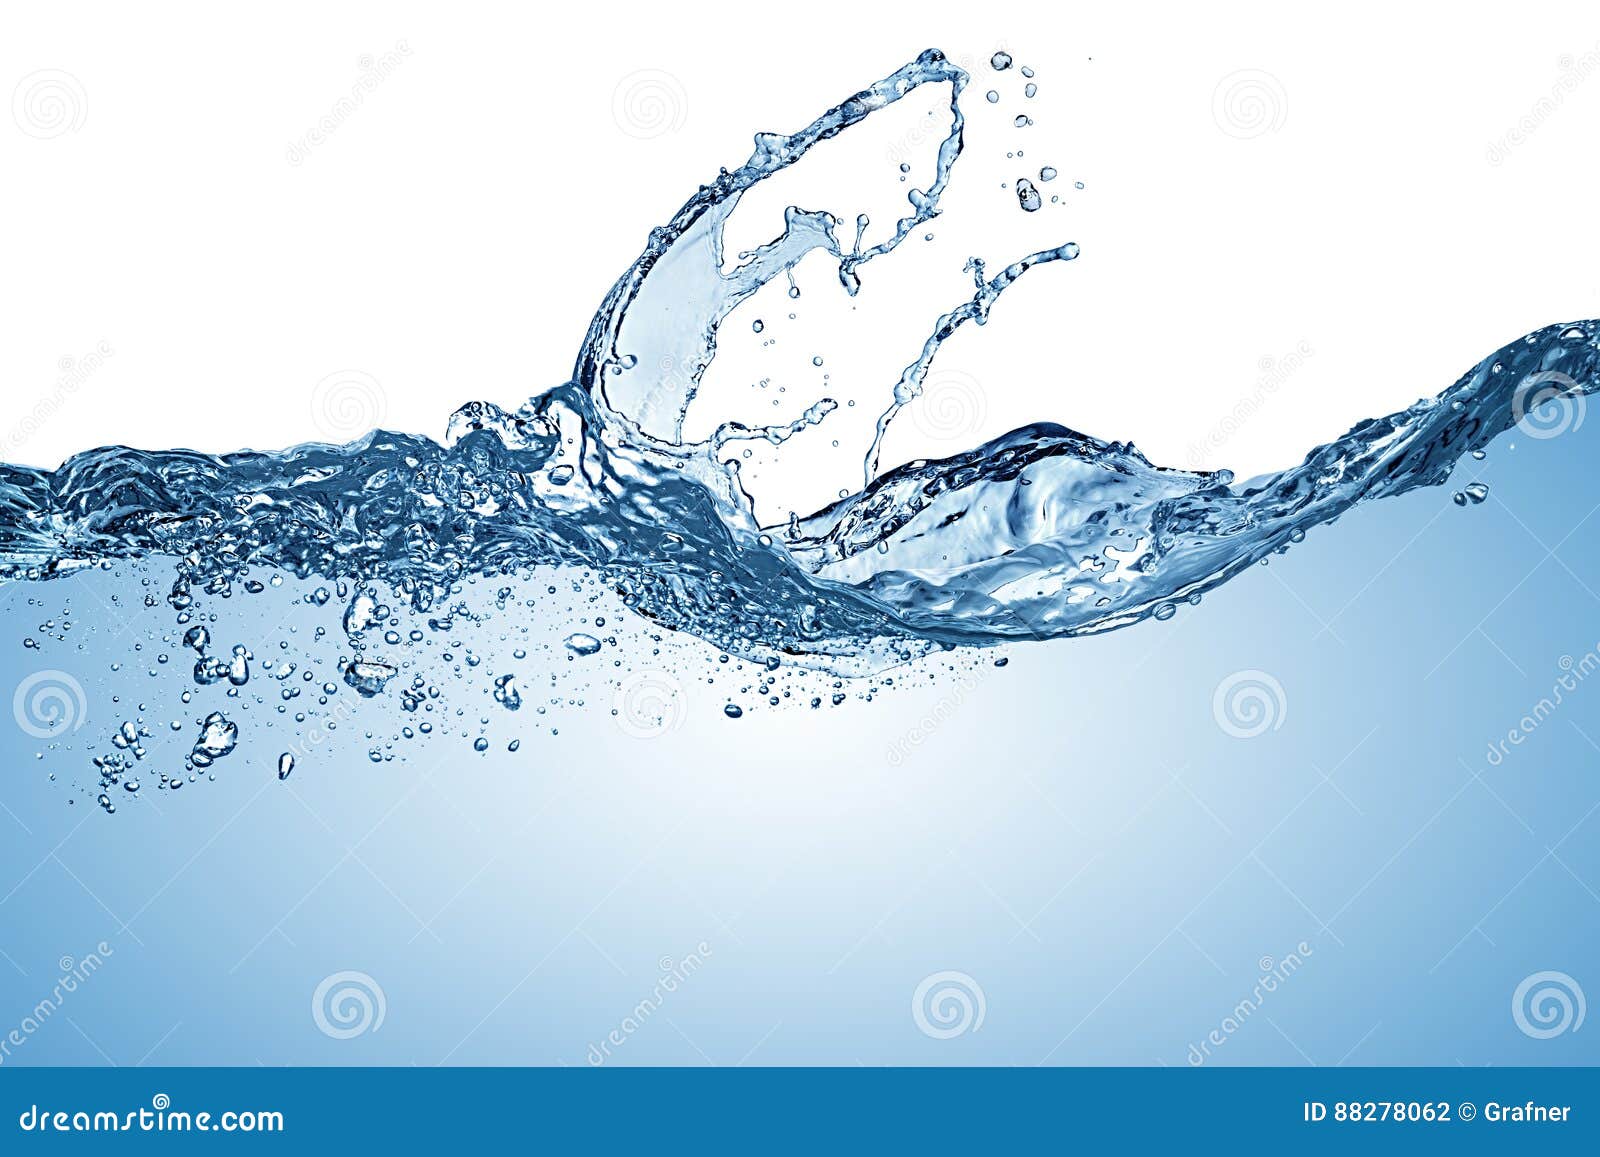 blue pure water wave splash